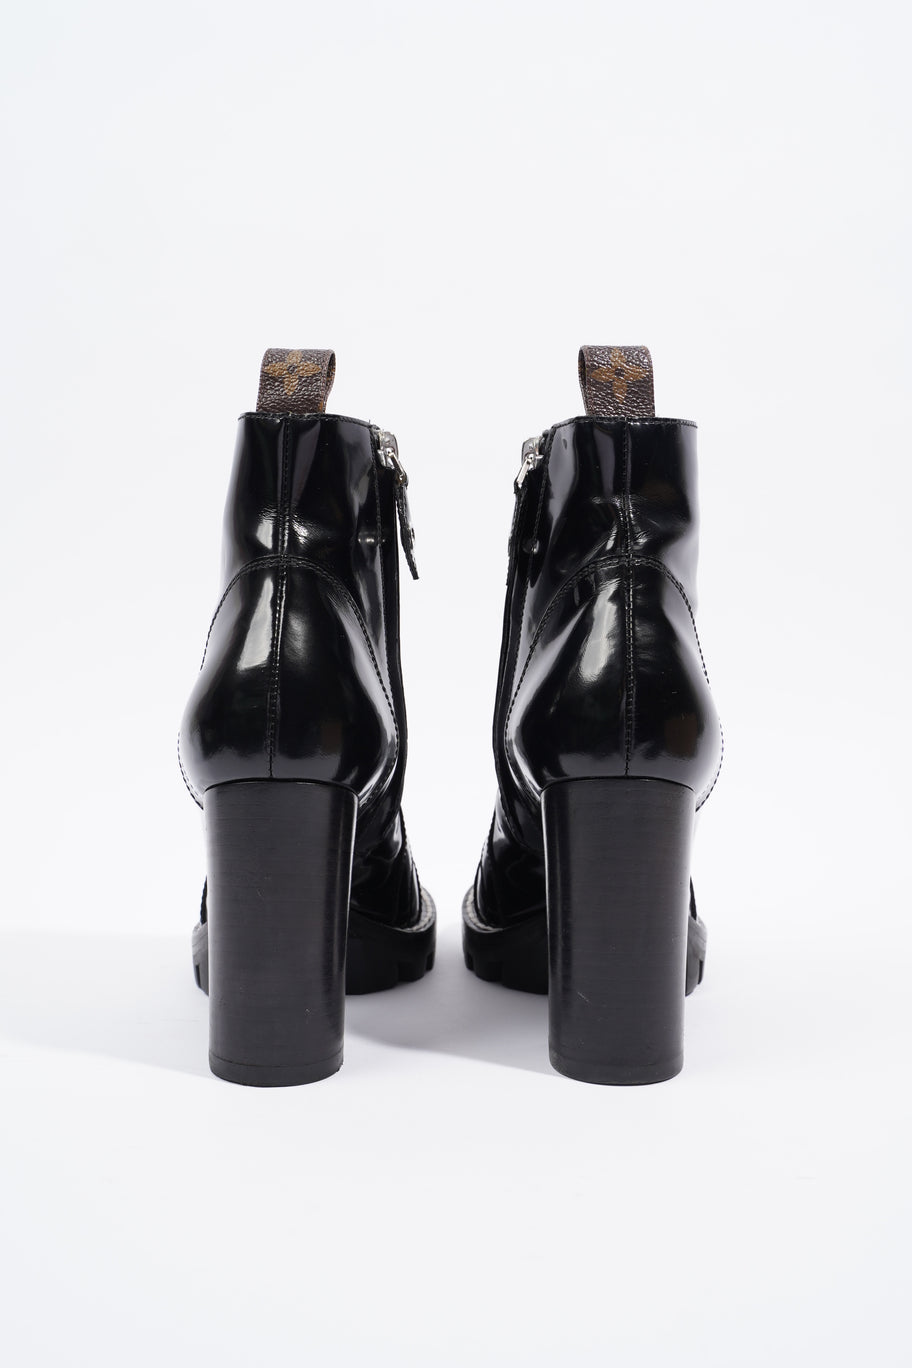 Louis Vuitton Star Trail Ankle Boot Patent Black EU 36 / UK 3 Image 6